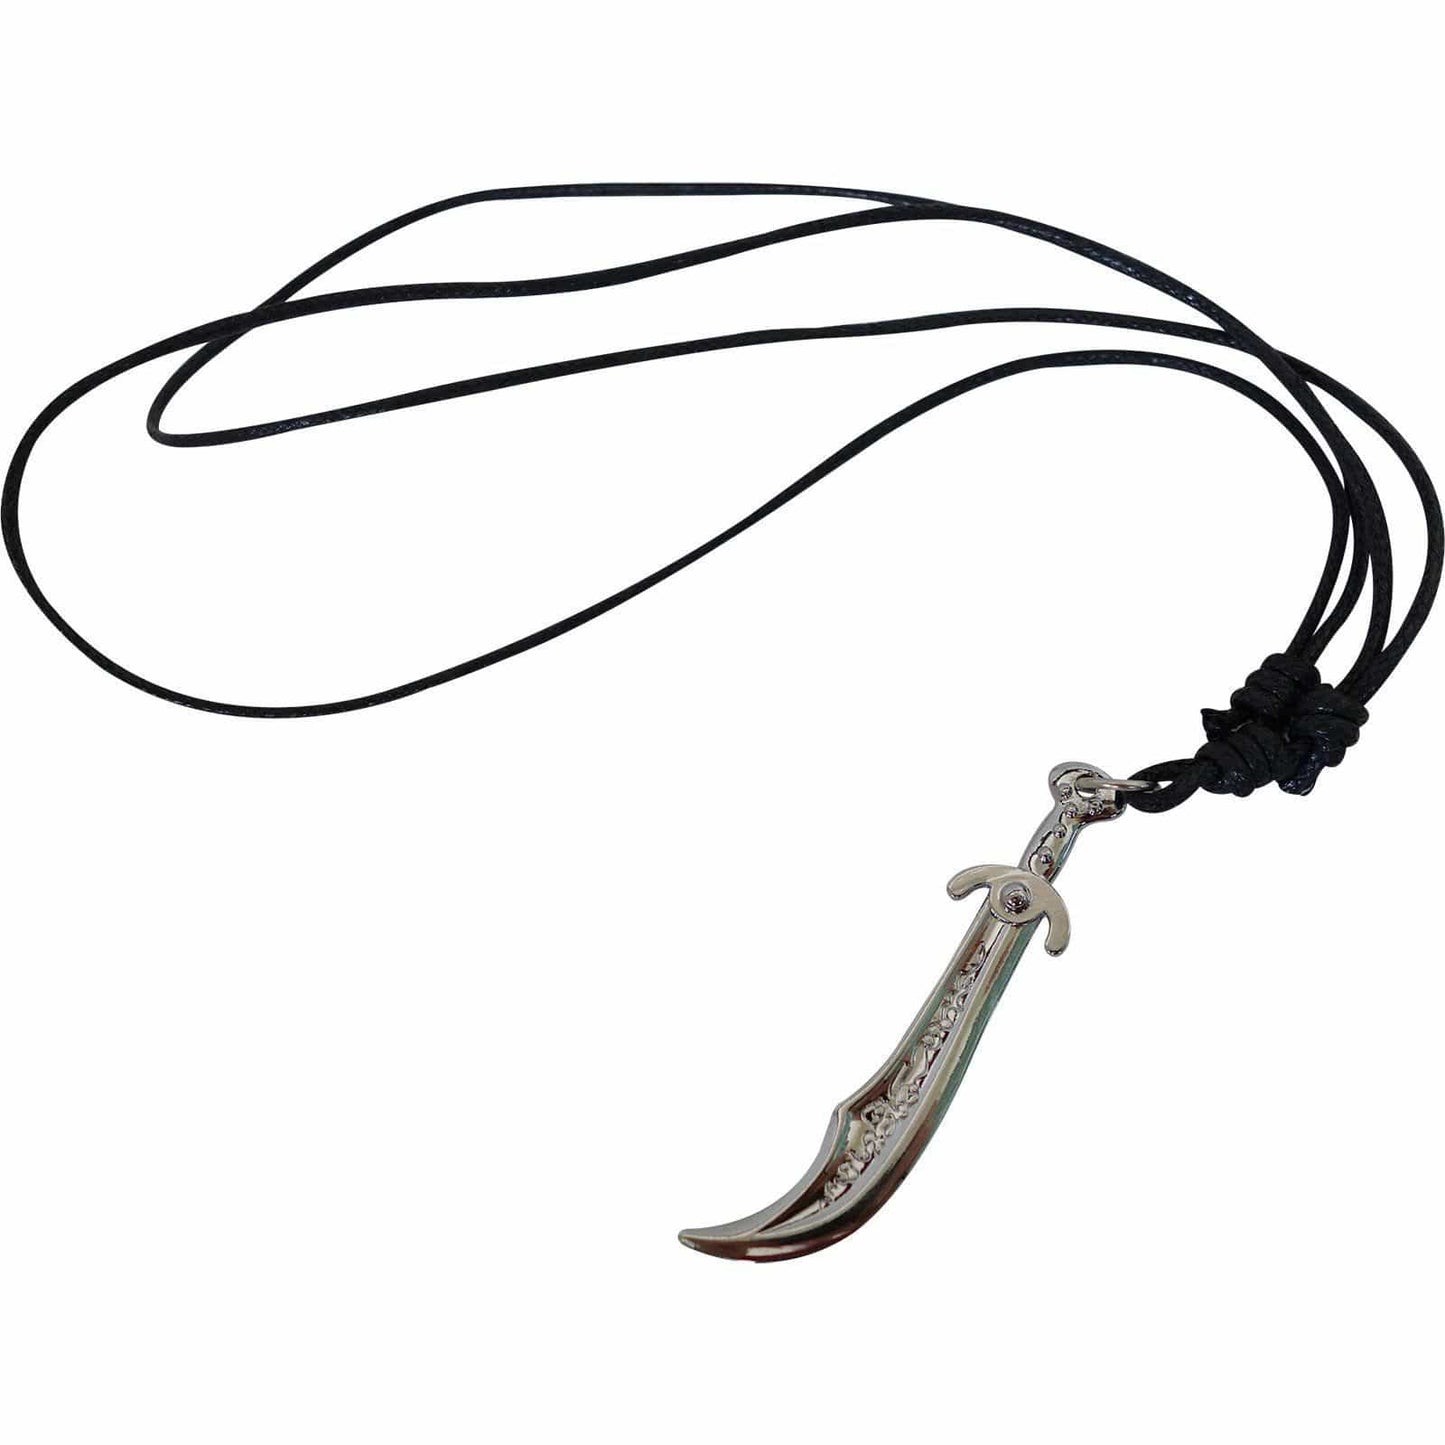 Sword Pendant Black Cord Necklace Chain Mens Boys Kid Mans Silver Tone Jewellery